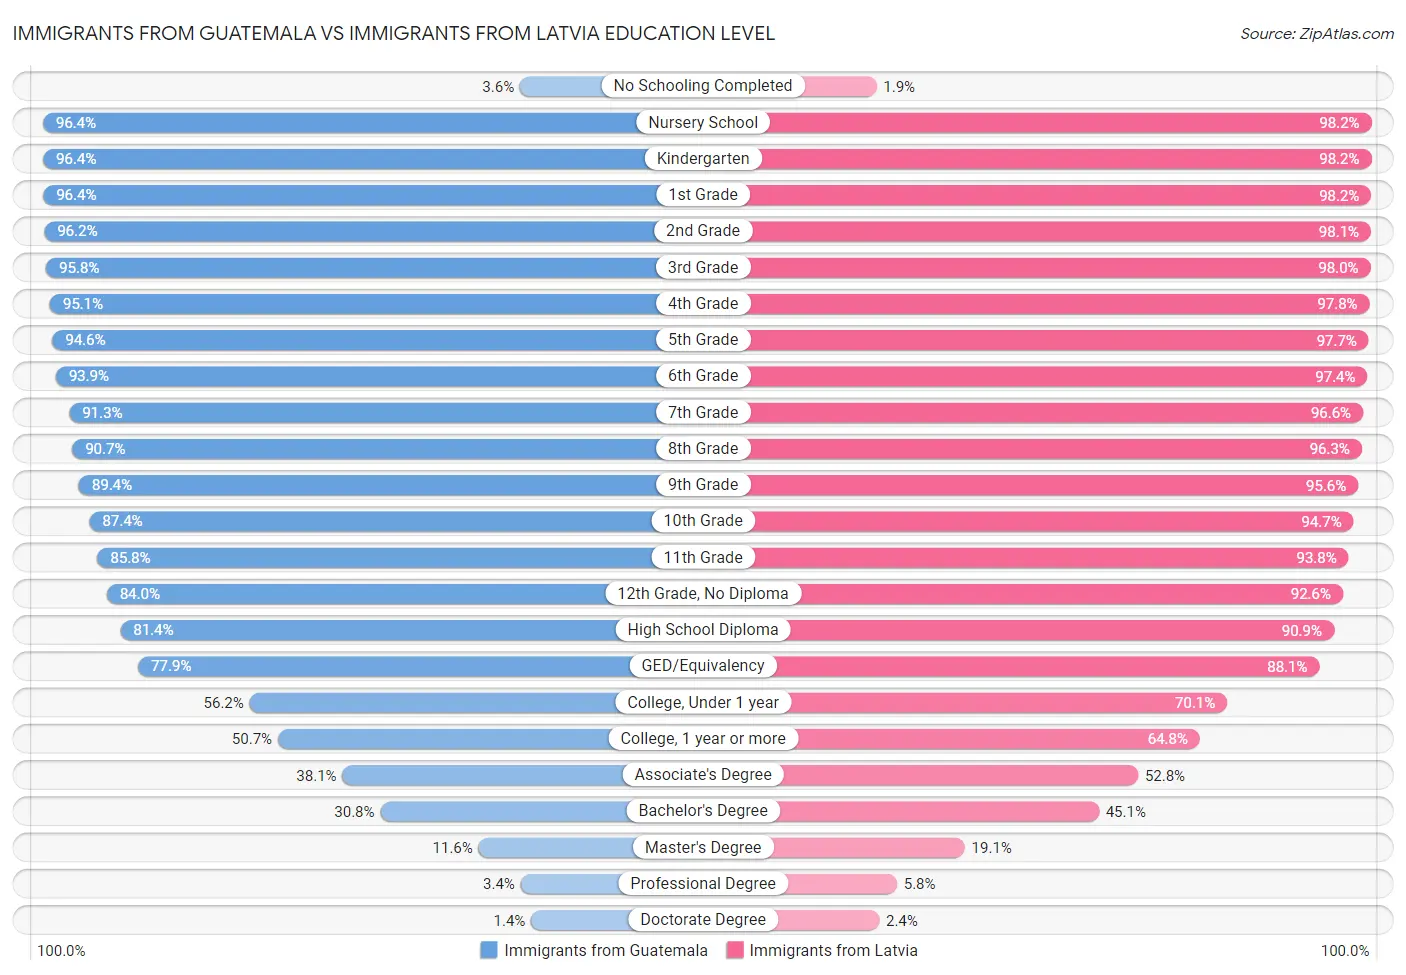 Immigrants from Guatemala vs Immigrants from Latvia Education Level